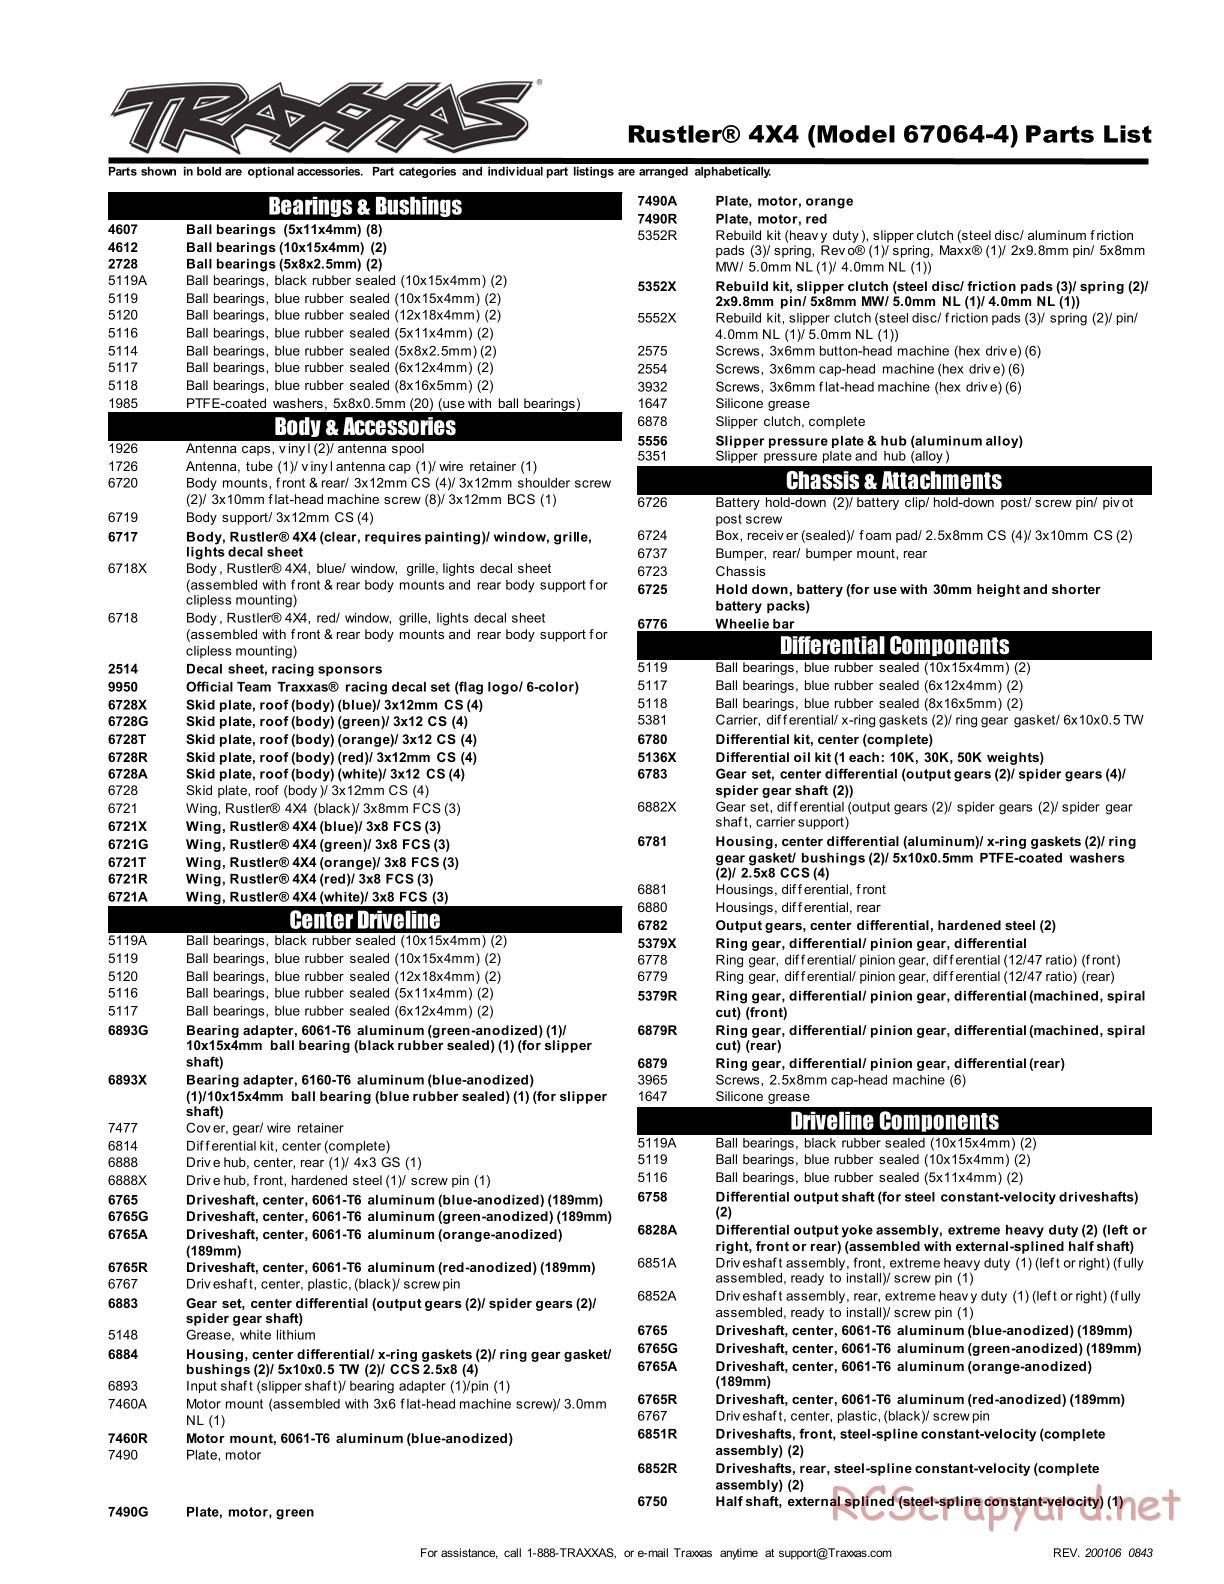 Traxxas - Rustler 4x4 XL-5 (2018) - Parts List - Page 1